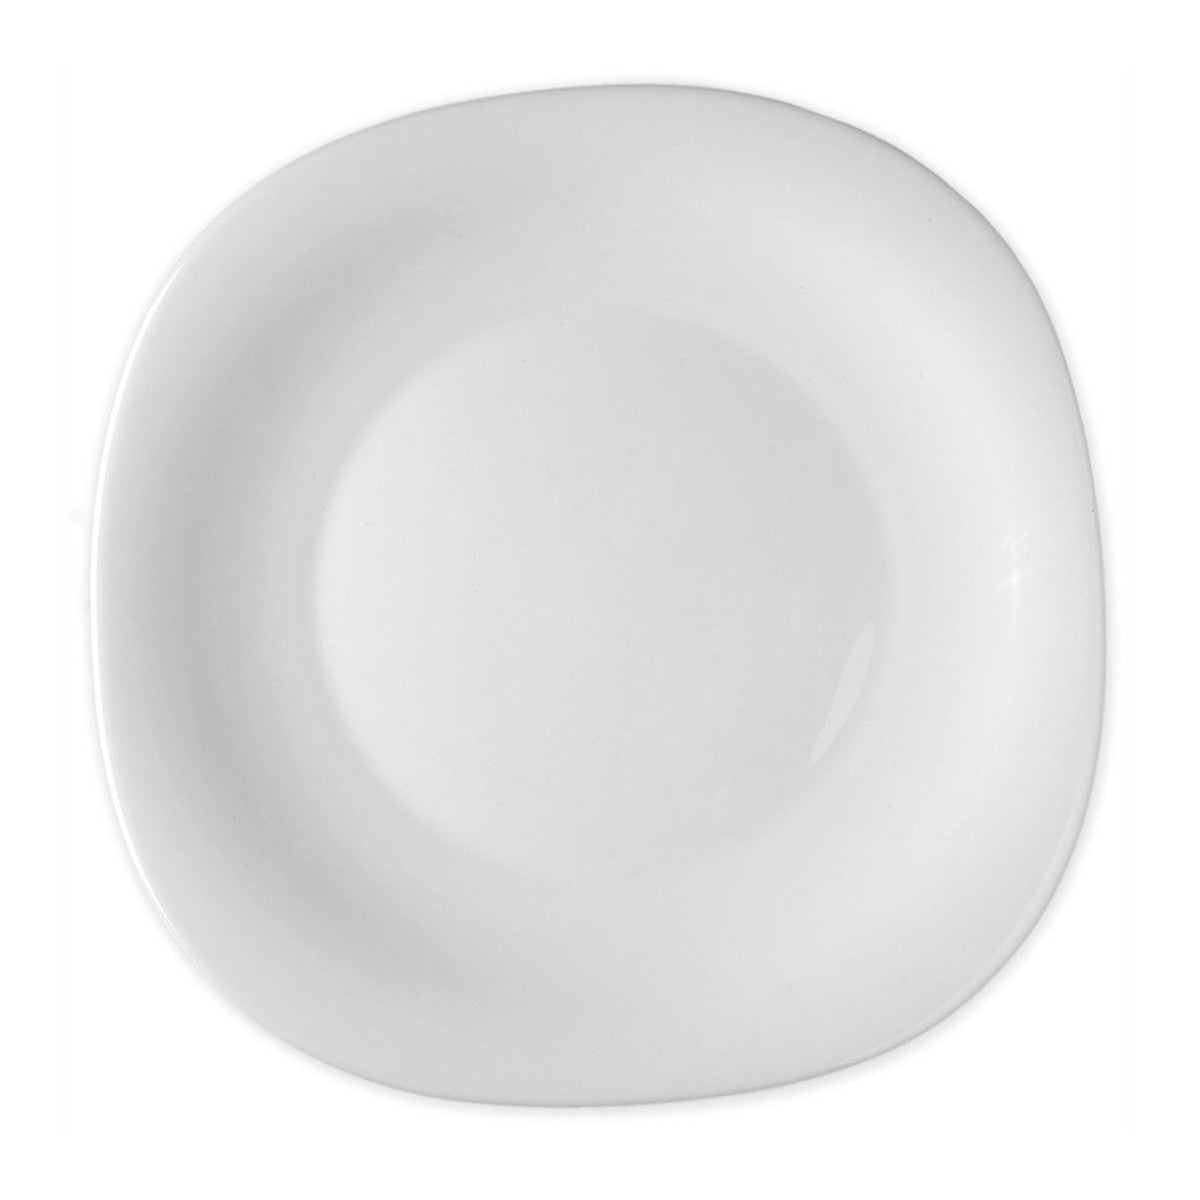 Bormioli Parma Dinner Plate 27cm